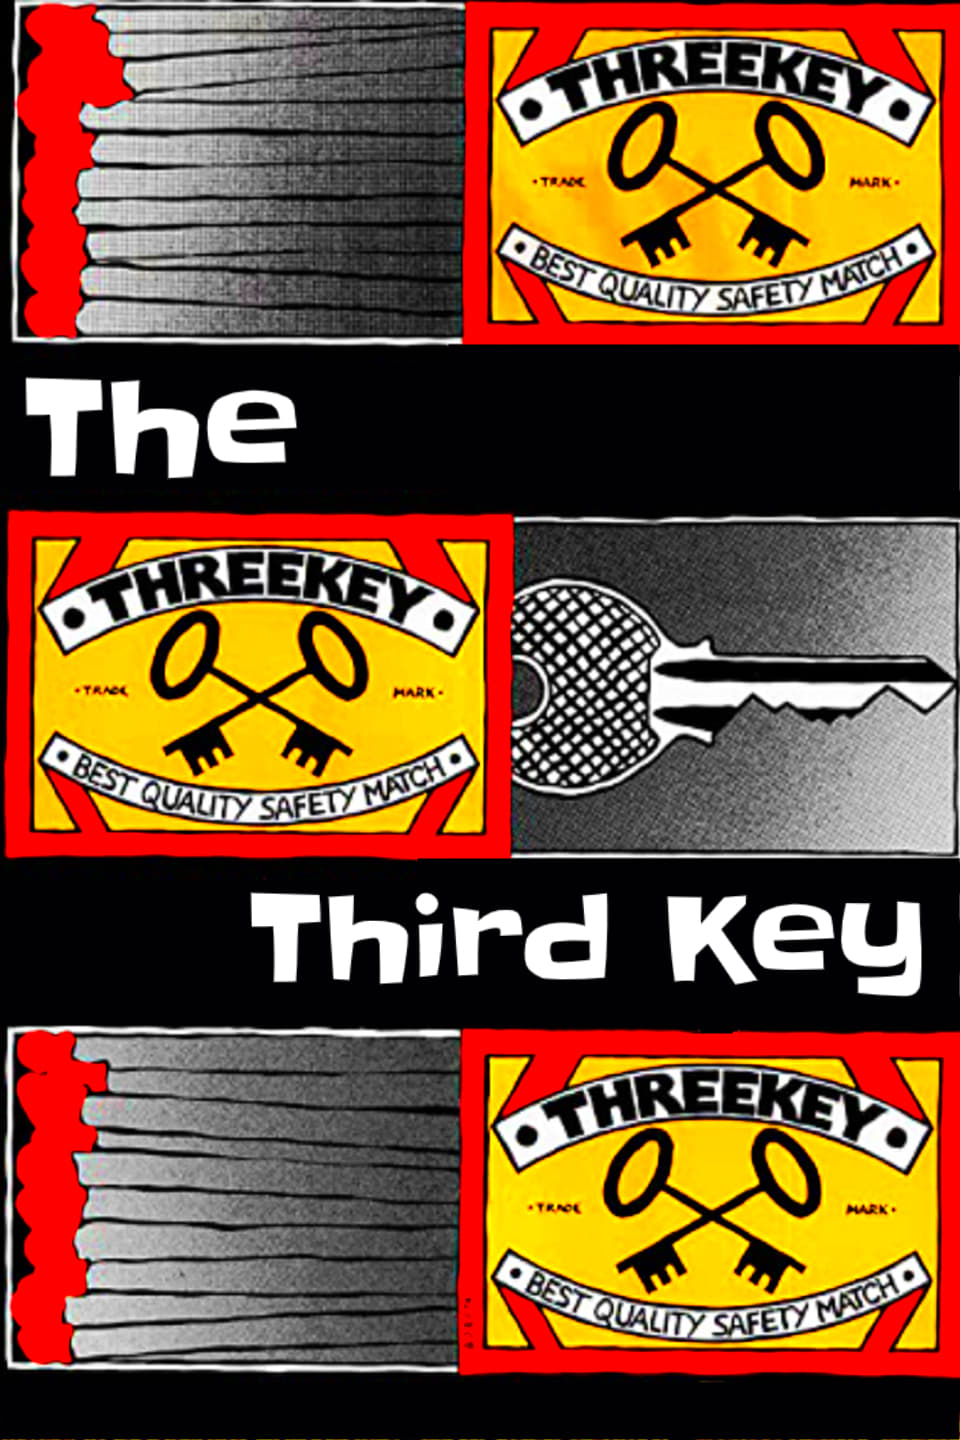 The Third Key